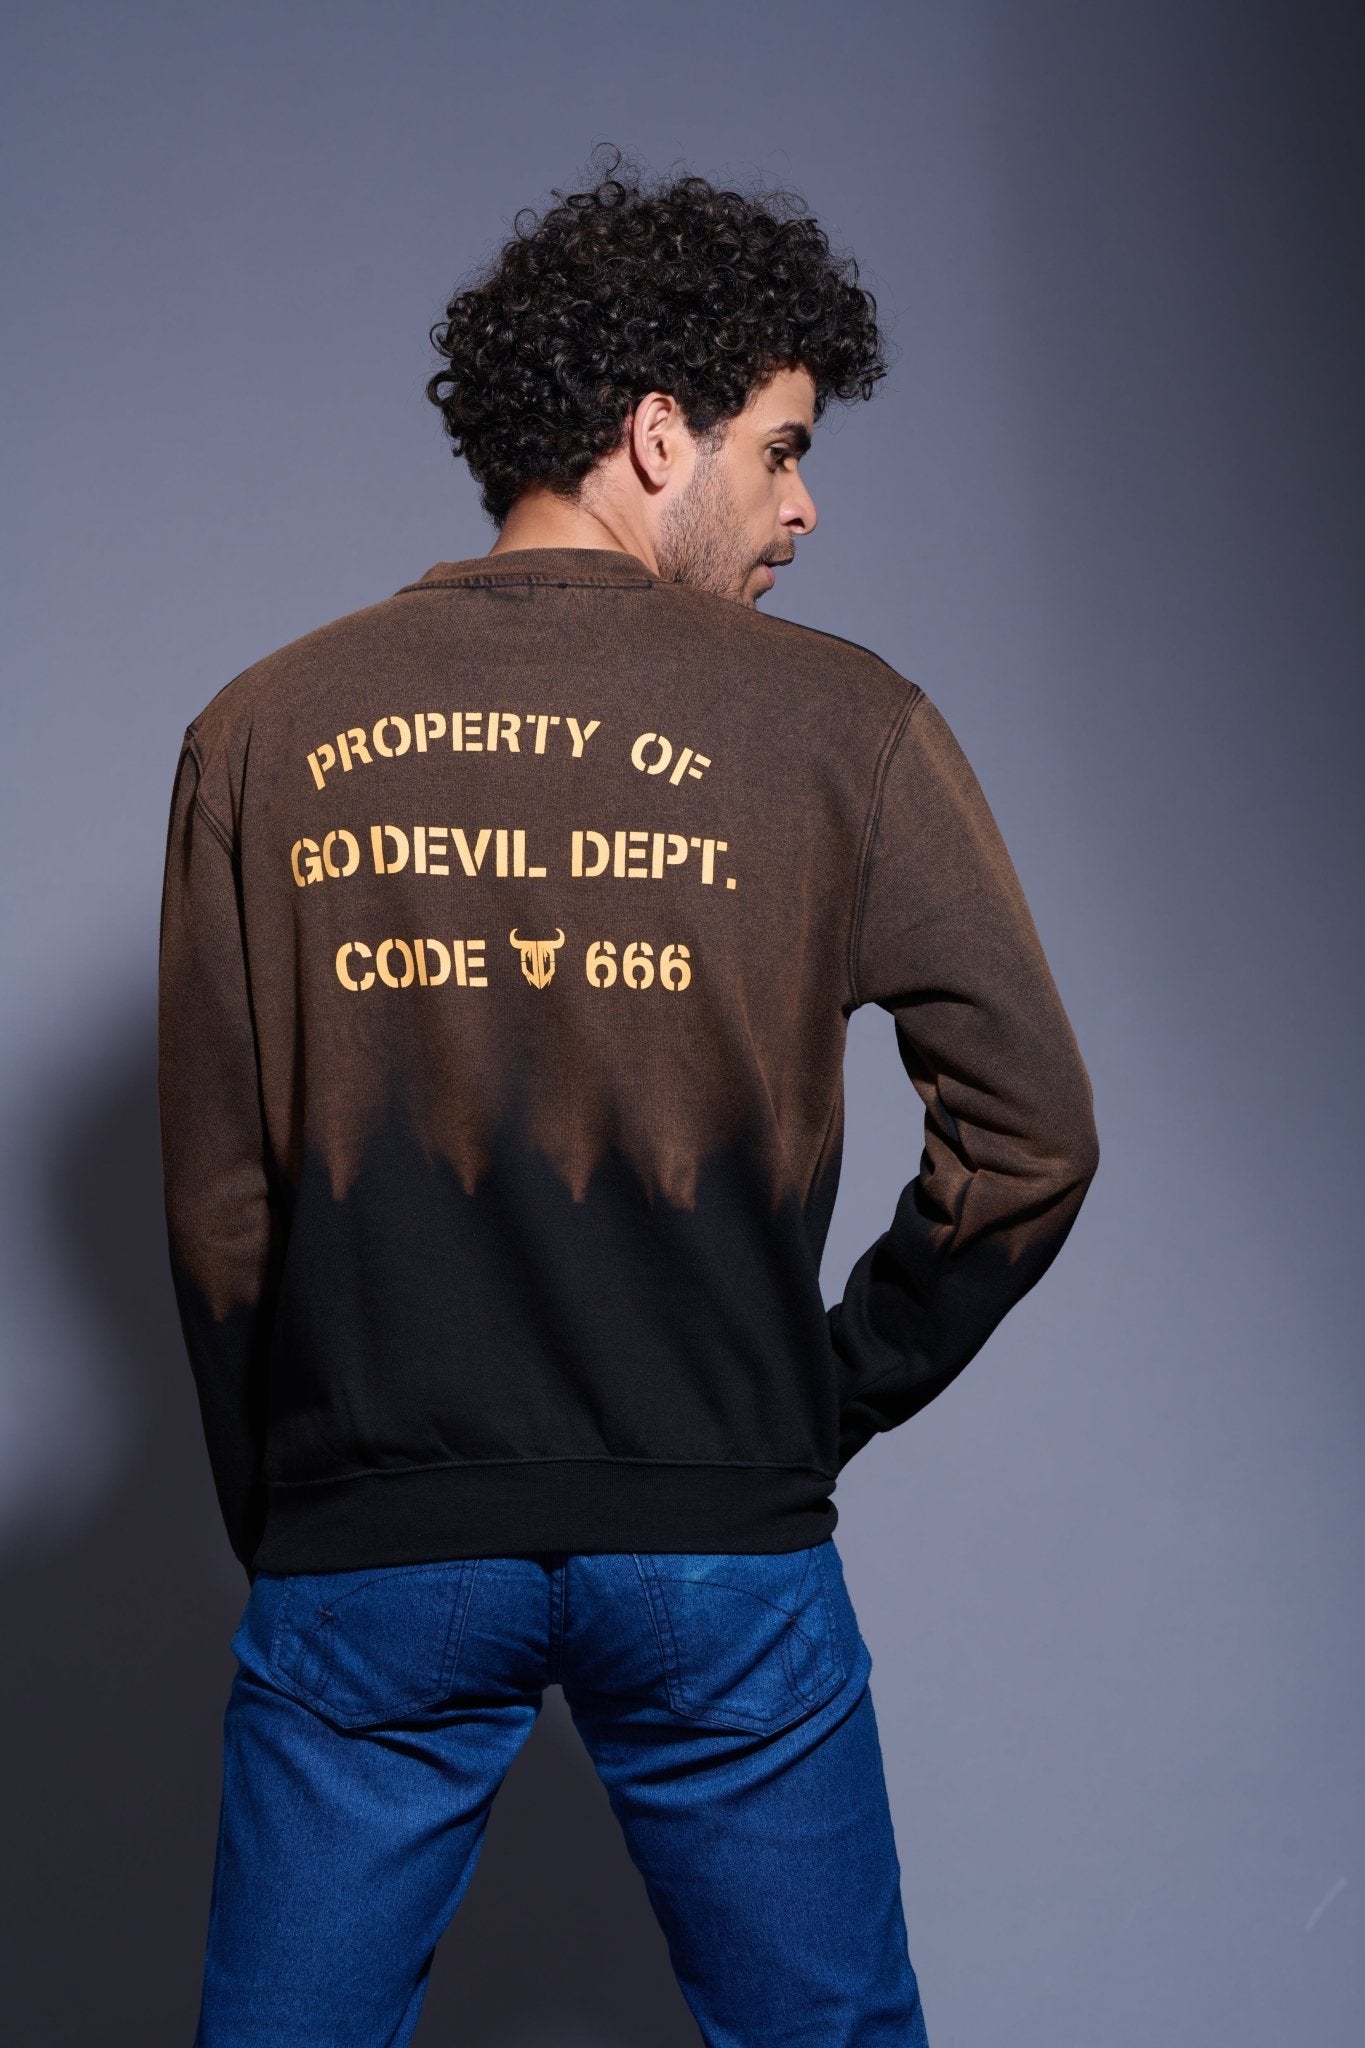 Property of Go Devil Browm Sweatshirt for Men - Go Devil